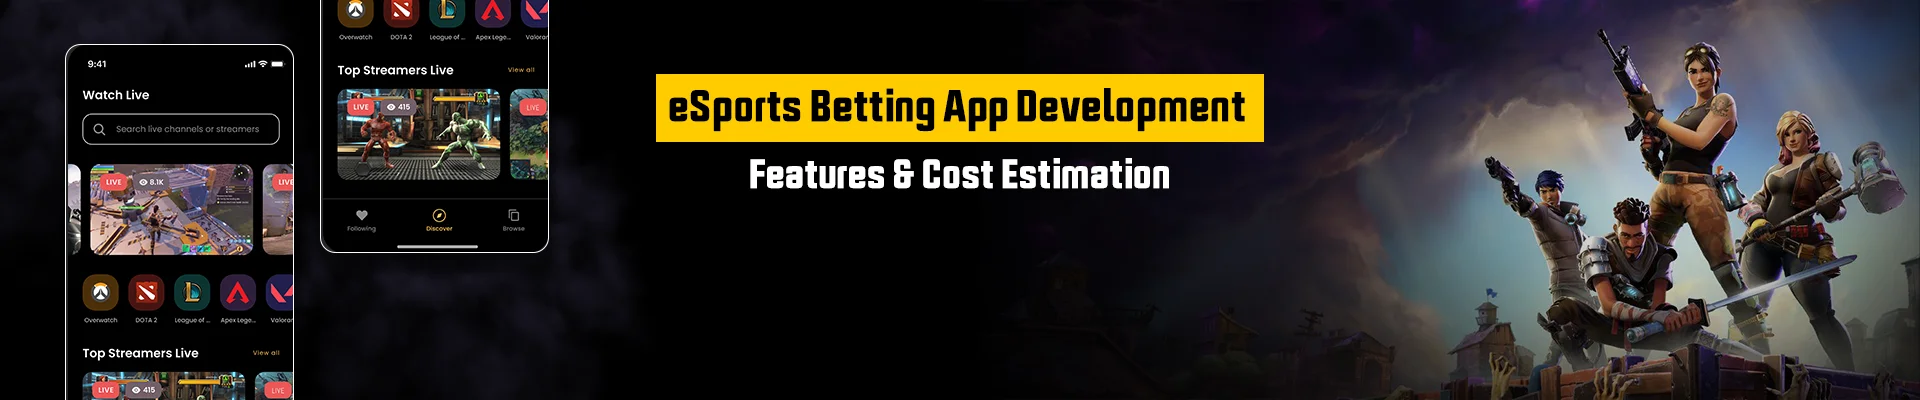 eSports Betting App Development